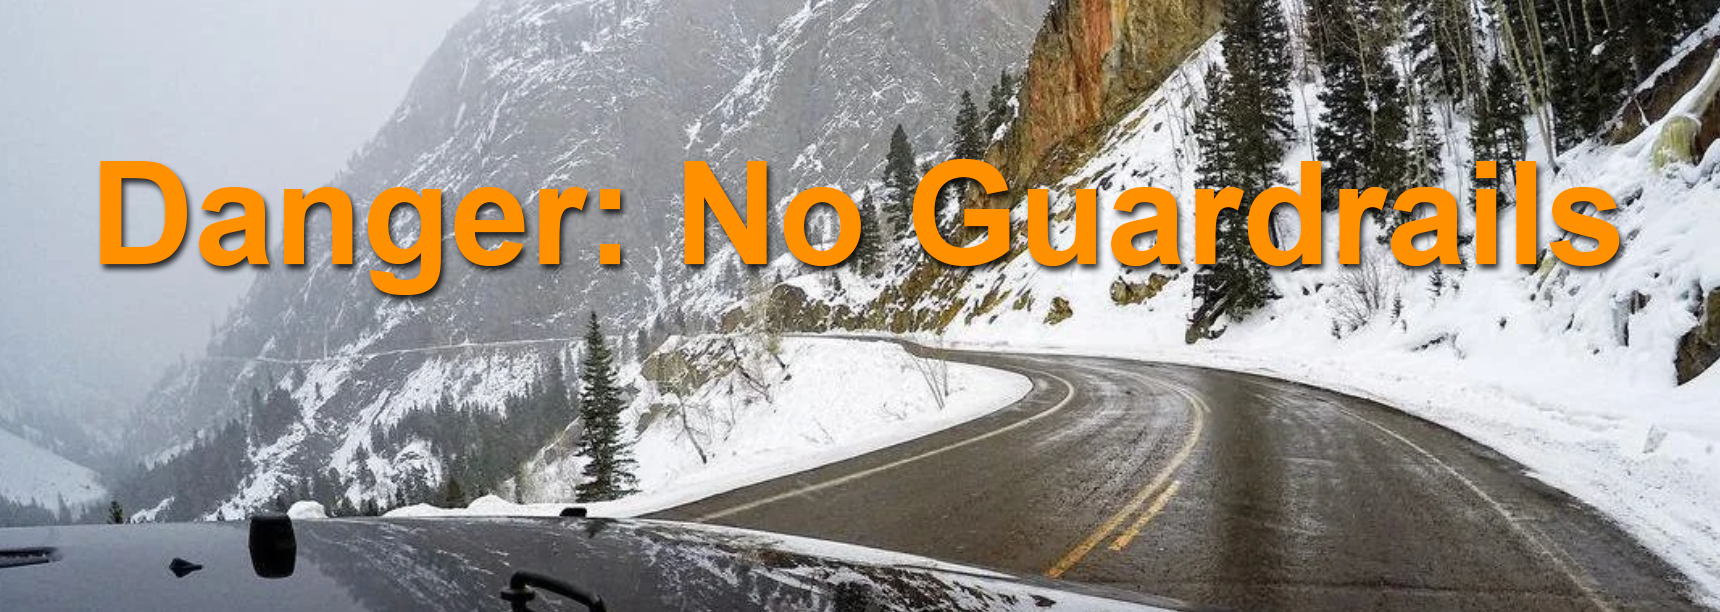 Danger- no guardrails - mountain road